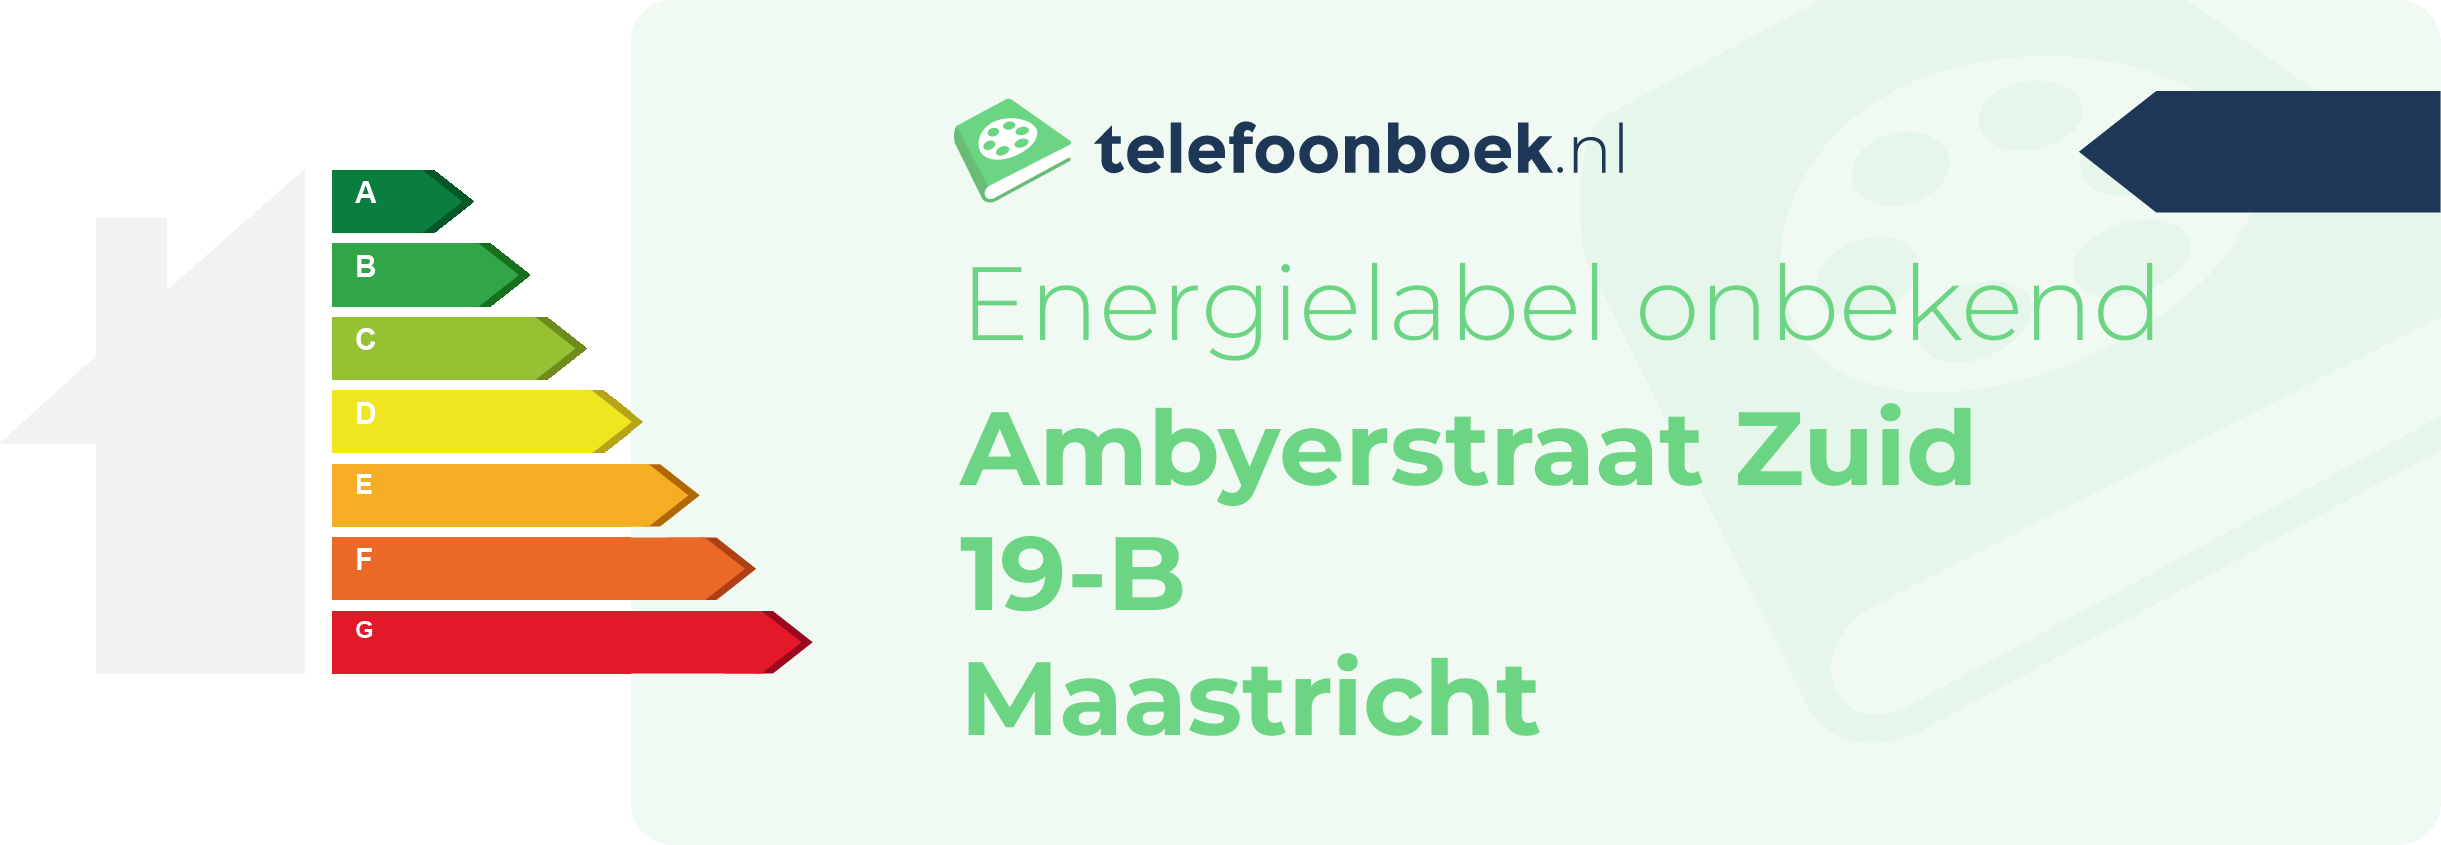 Energielabel Ambyerstraat Zuid 19-B Maastricht